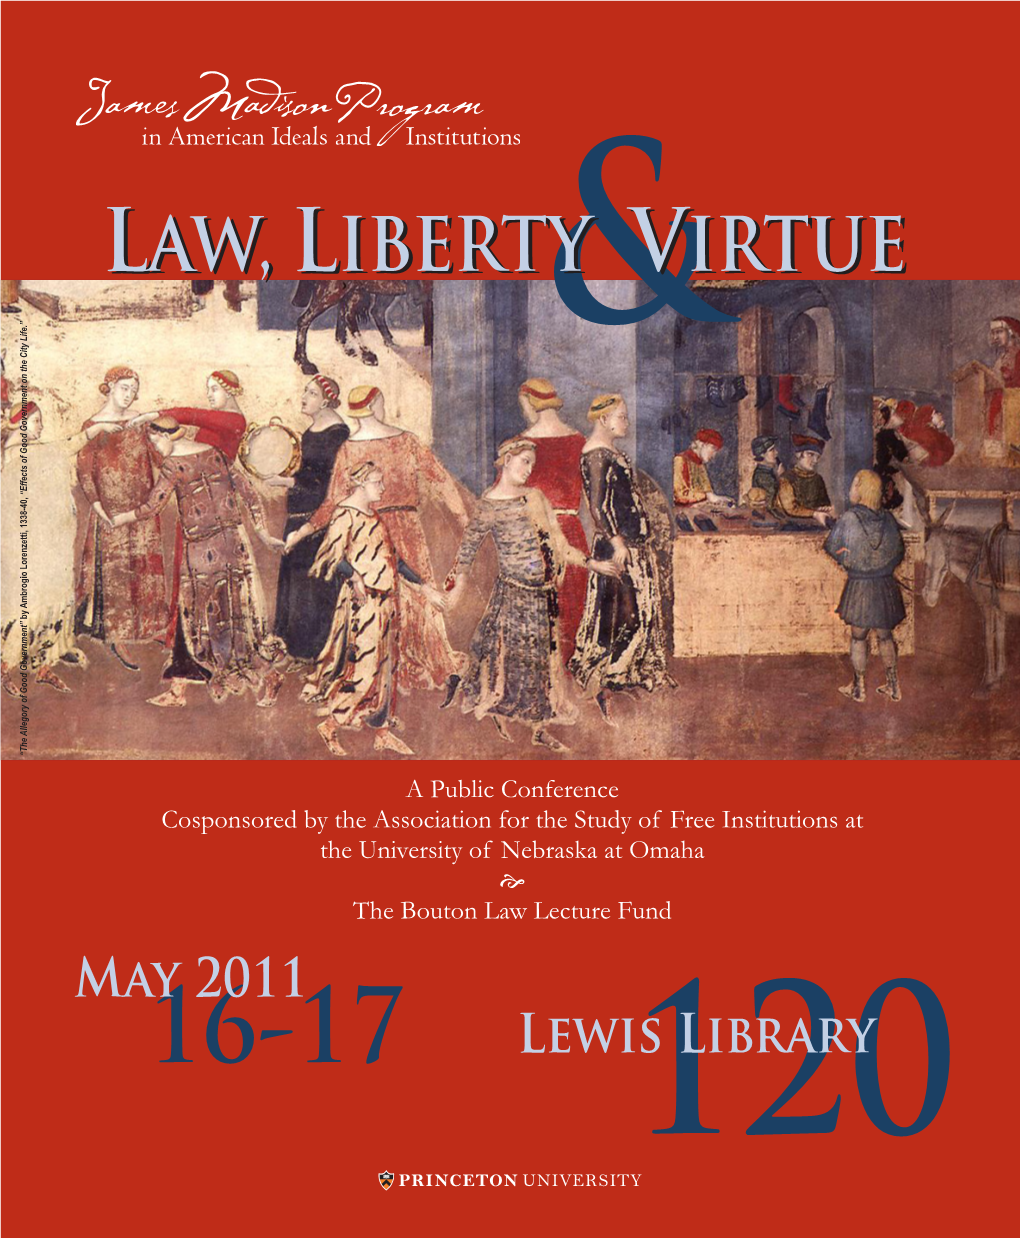 Law, Liberty Virtue